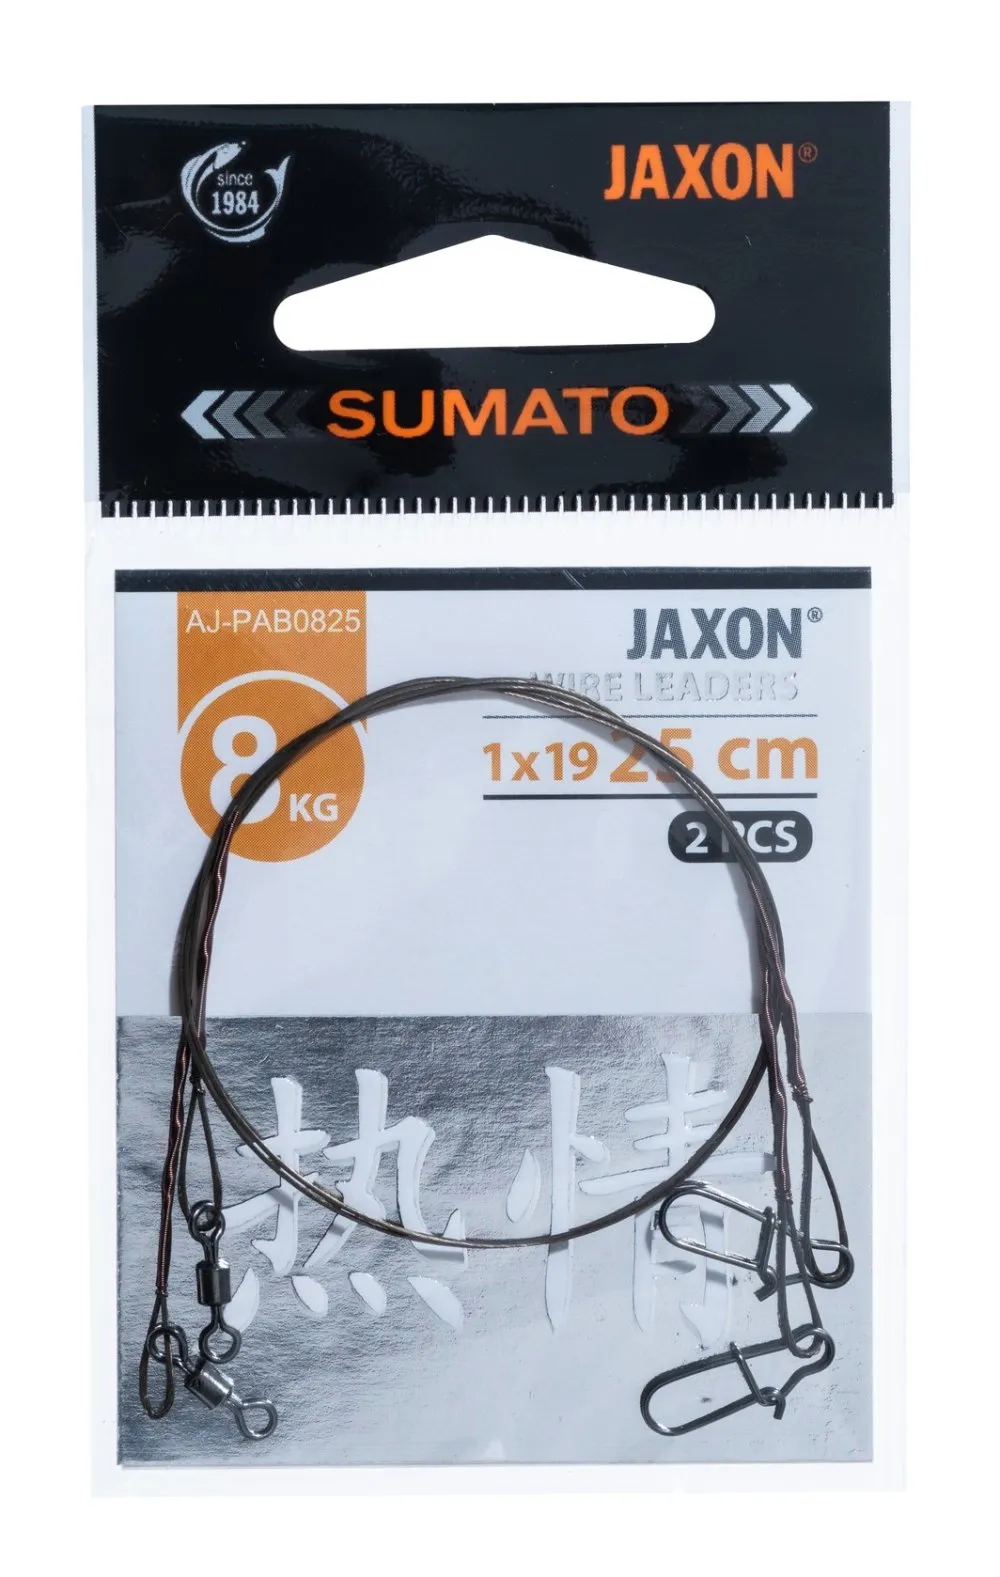 SNECI - Horgász webshop és horgászbolt - JAXON SUMATO WIRE LEADERS 8kg 30cm